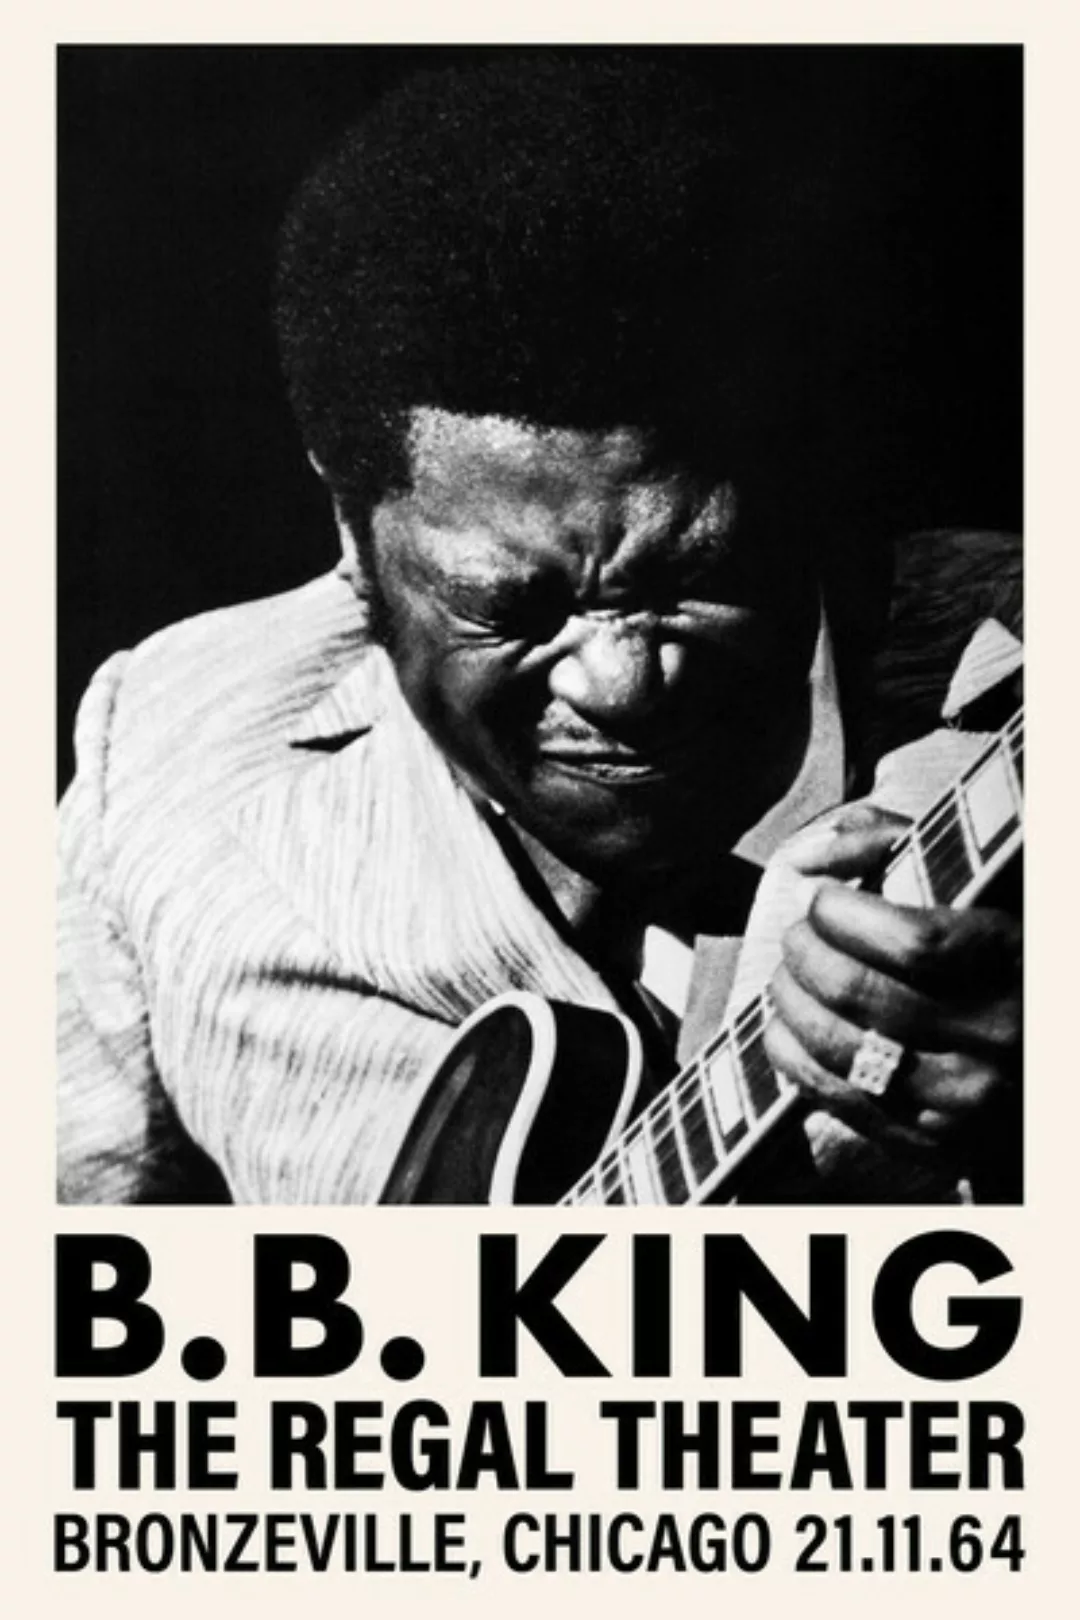 Poster / Leinwandbild - B.B. King At The Regal Theater günstig online kaufen